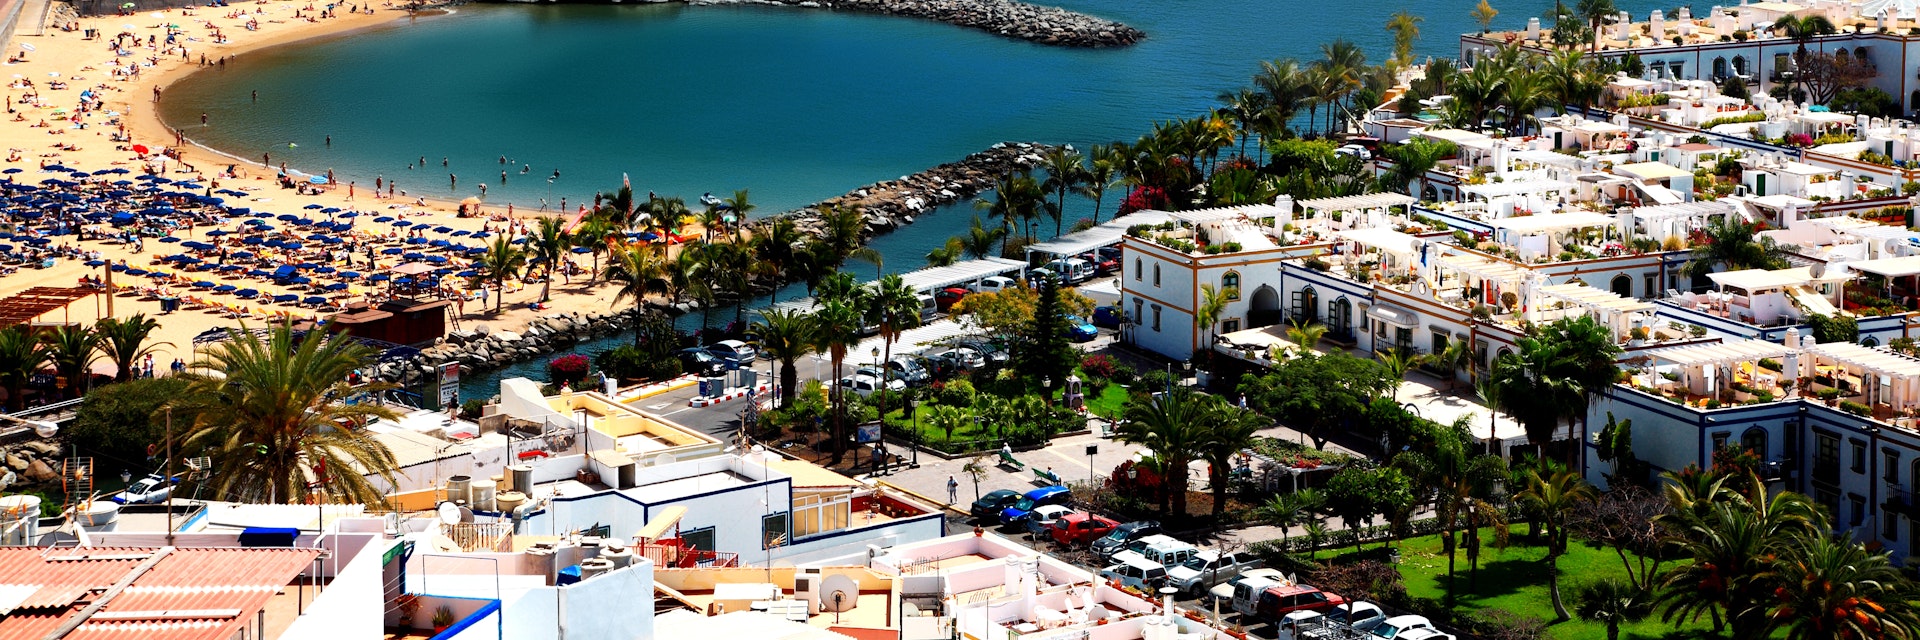 Puerto de MogÃƒÂ¡n, Gran Canaria, Canary Islands, Spa